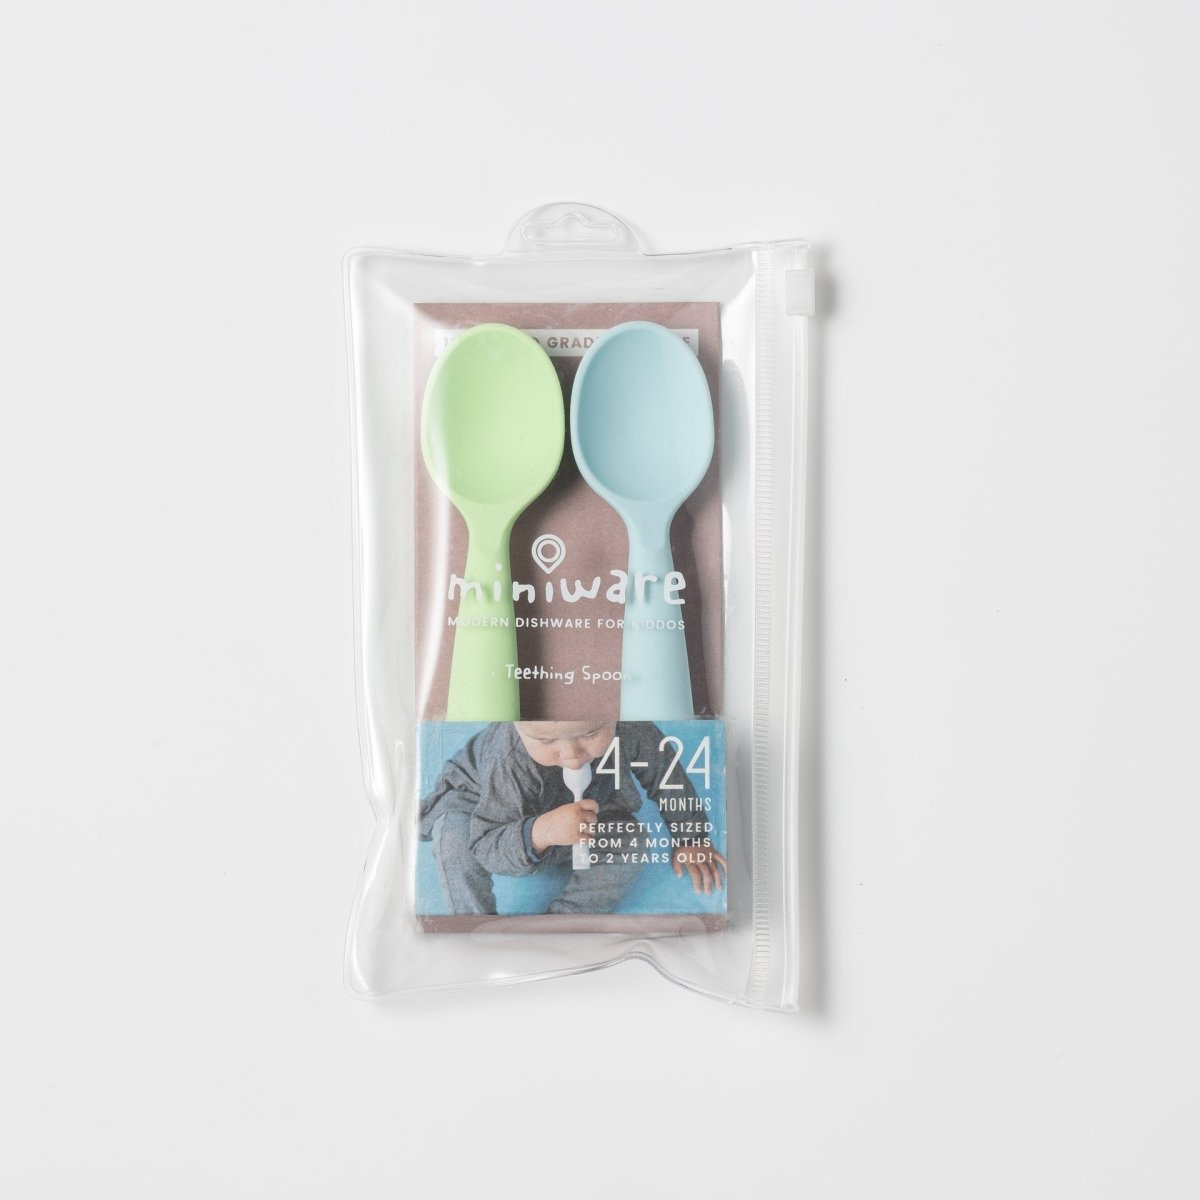 Miniware Training Spoon Set - Aqua and Lime - MWTSAK